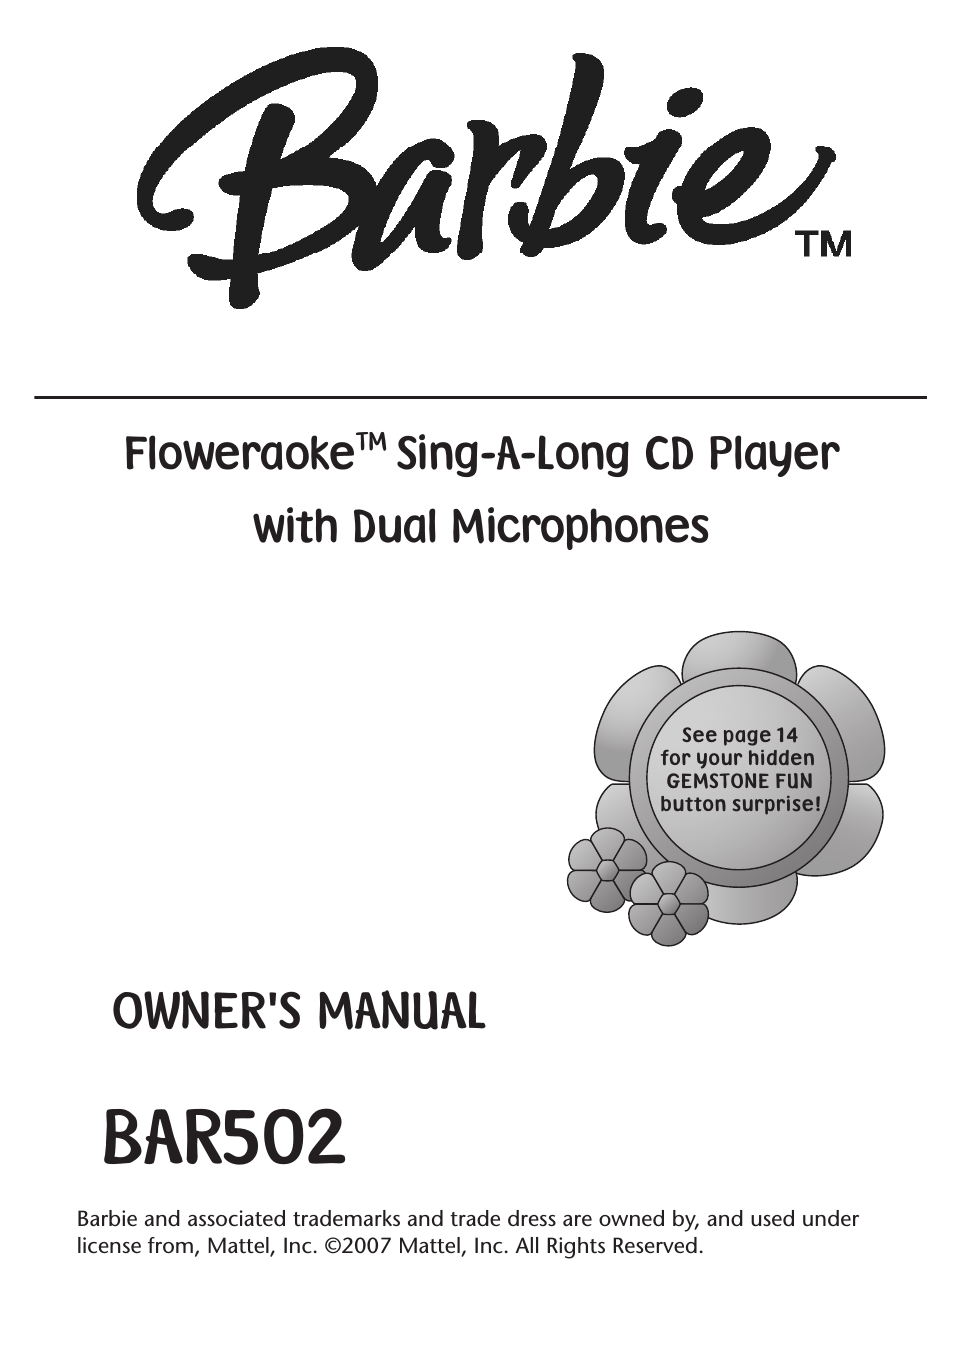 Barbie BAR502 Floweroake CD Player with Dual Mircophone